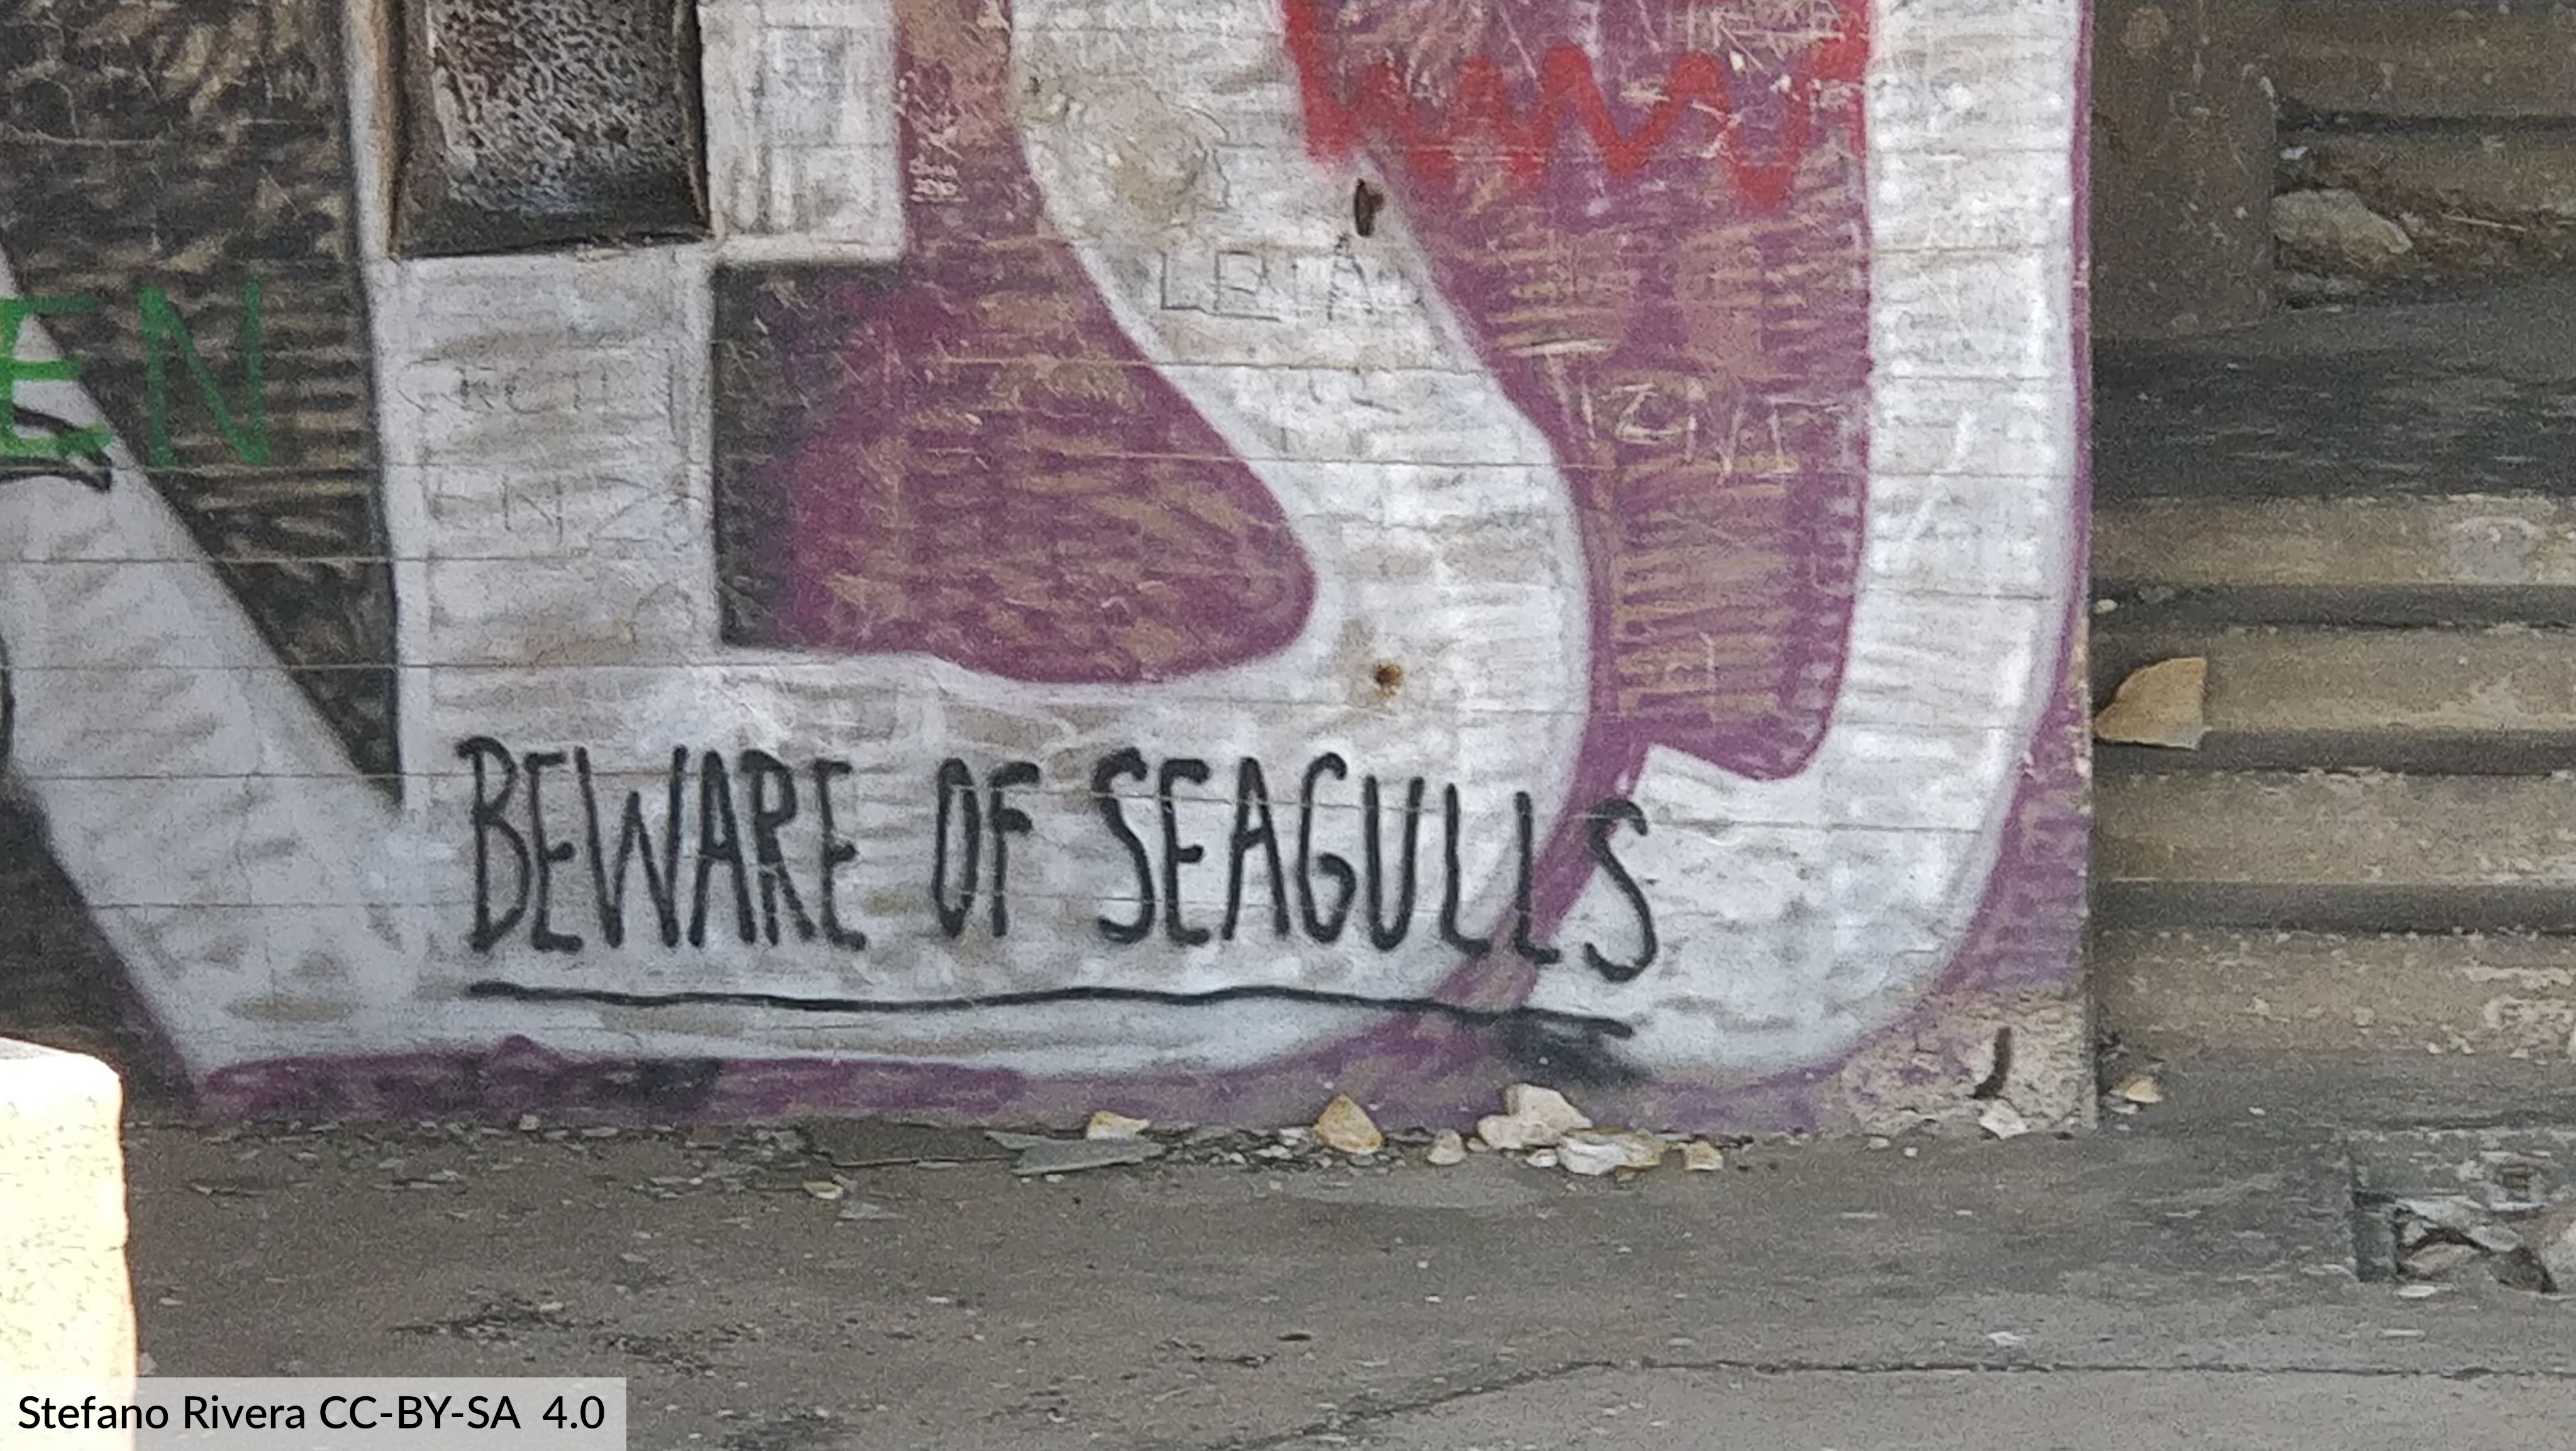 A grafiti in Frioul saying 'Beware of Seagulls'